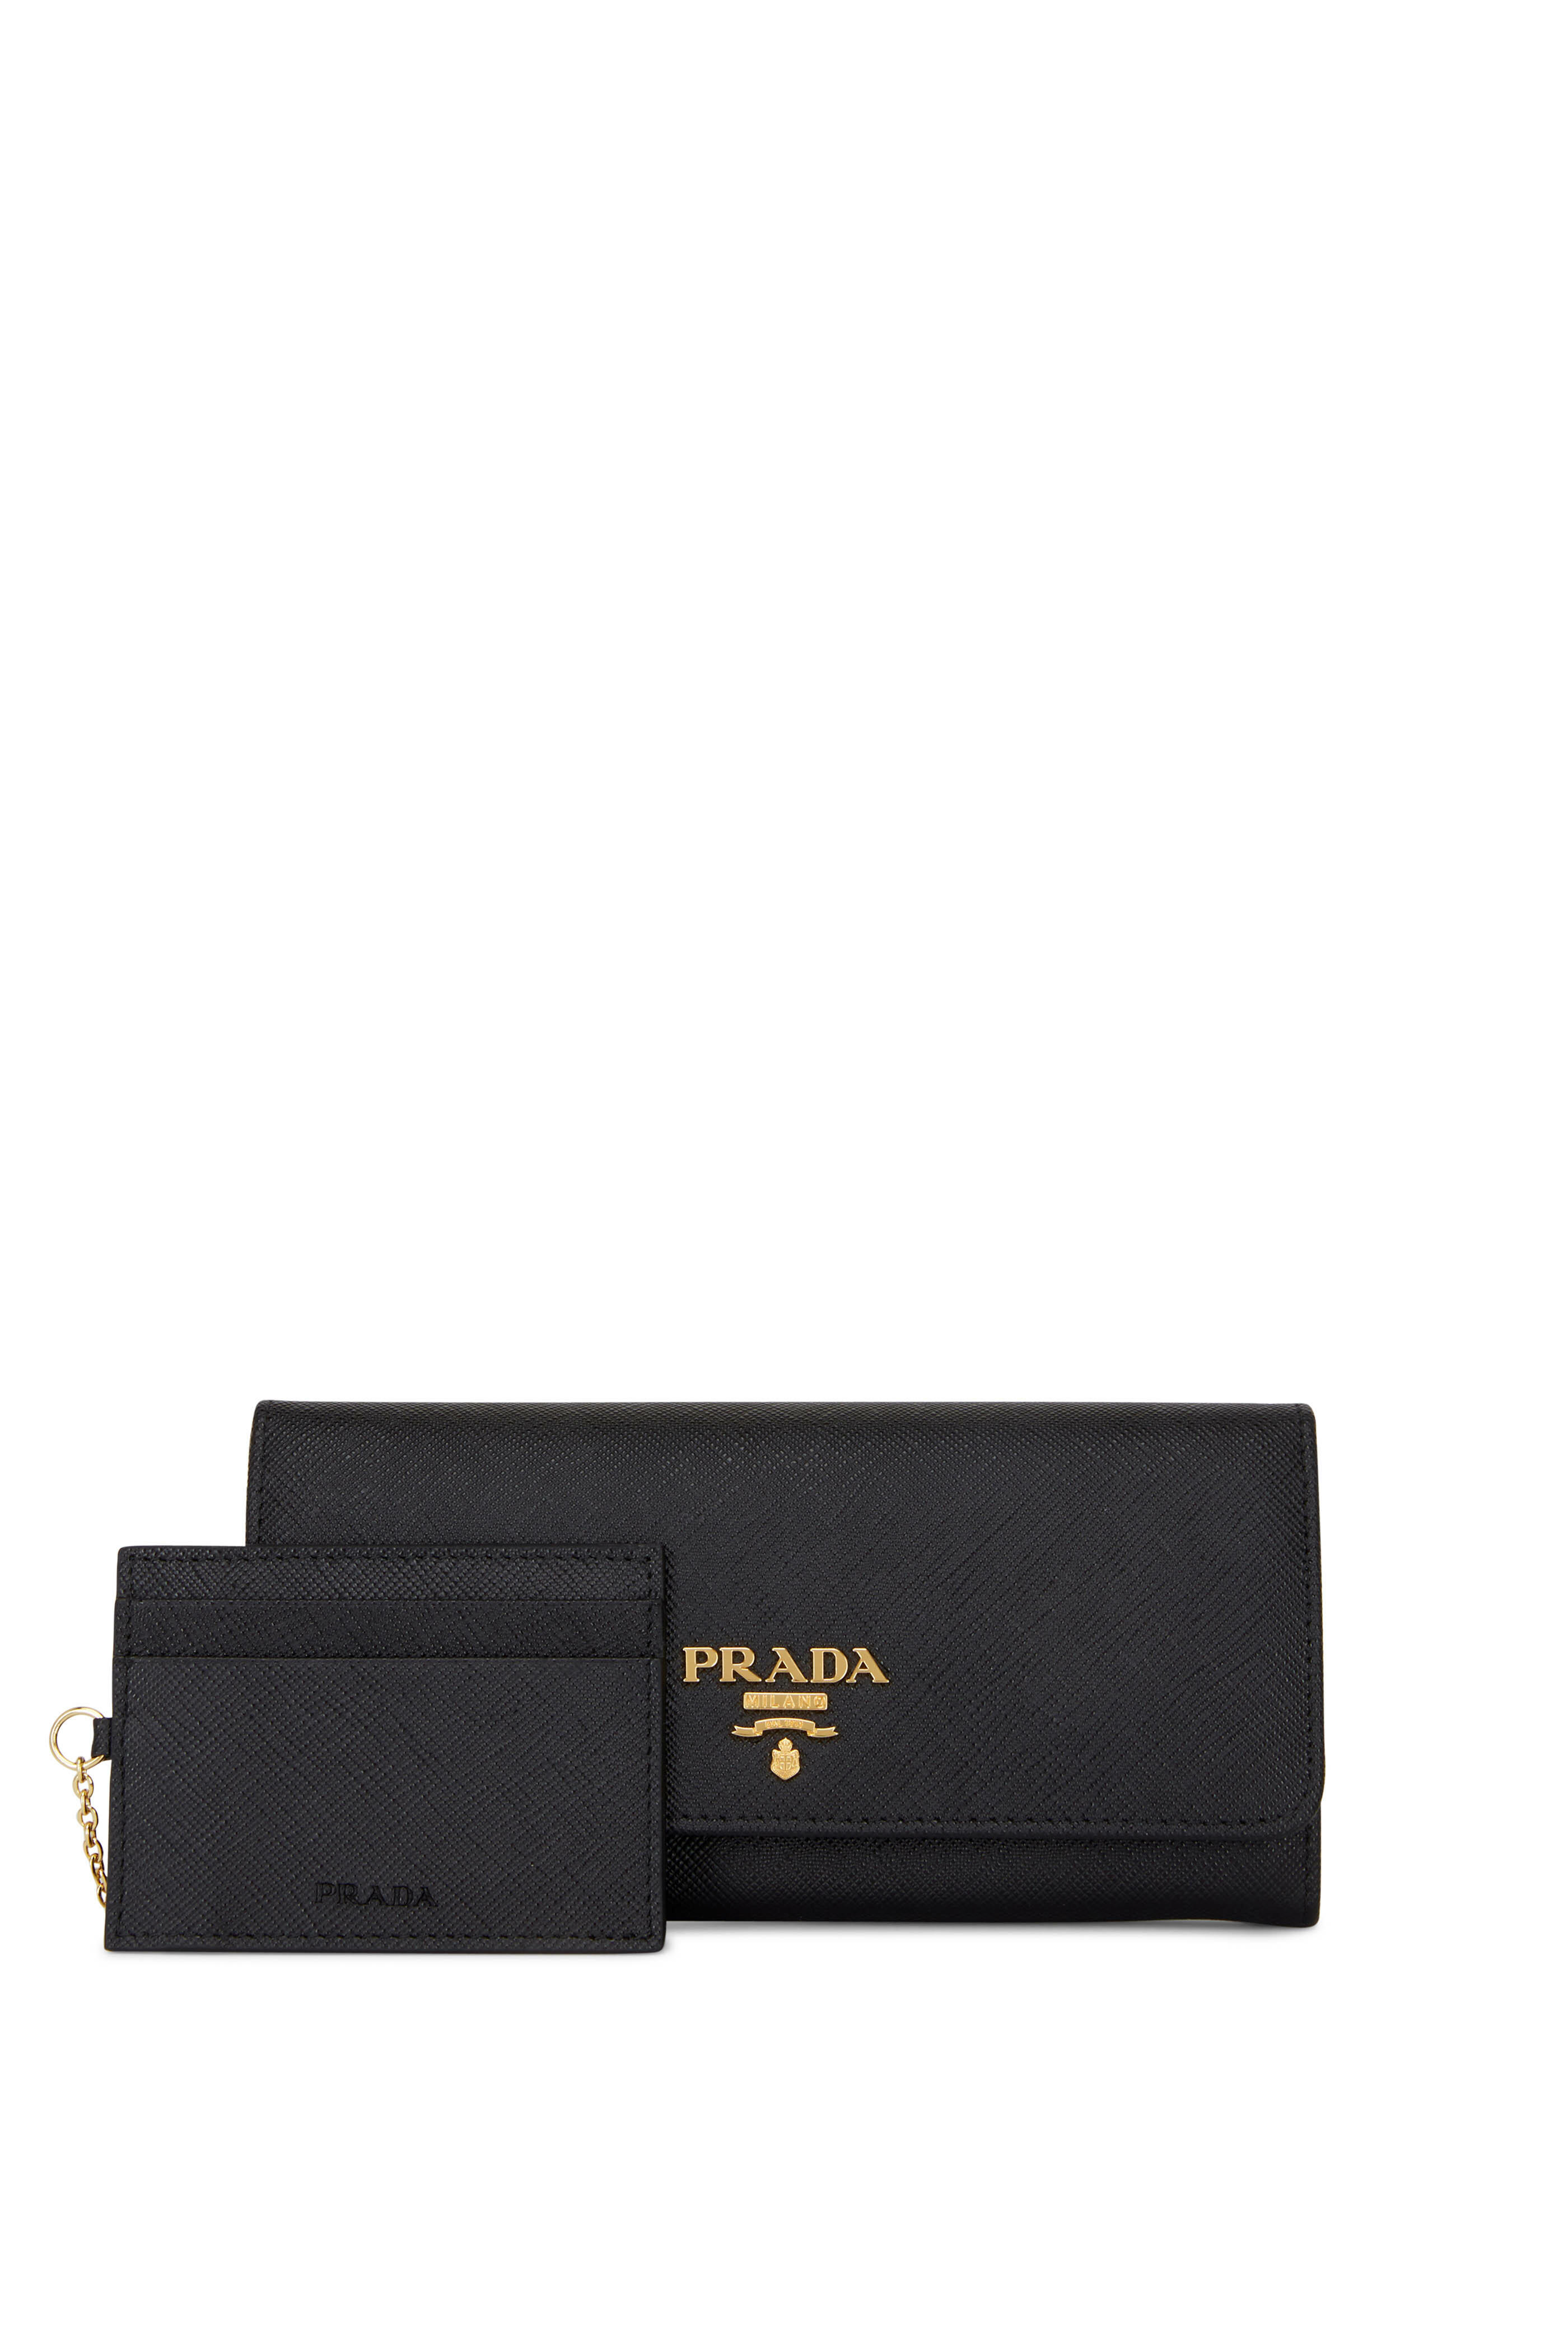 Prada Men's Saffiano Leather Wallet - Black One-Size